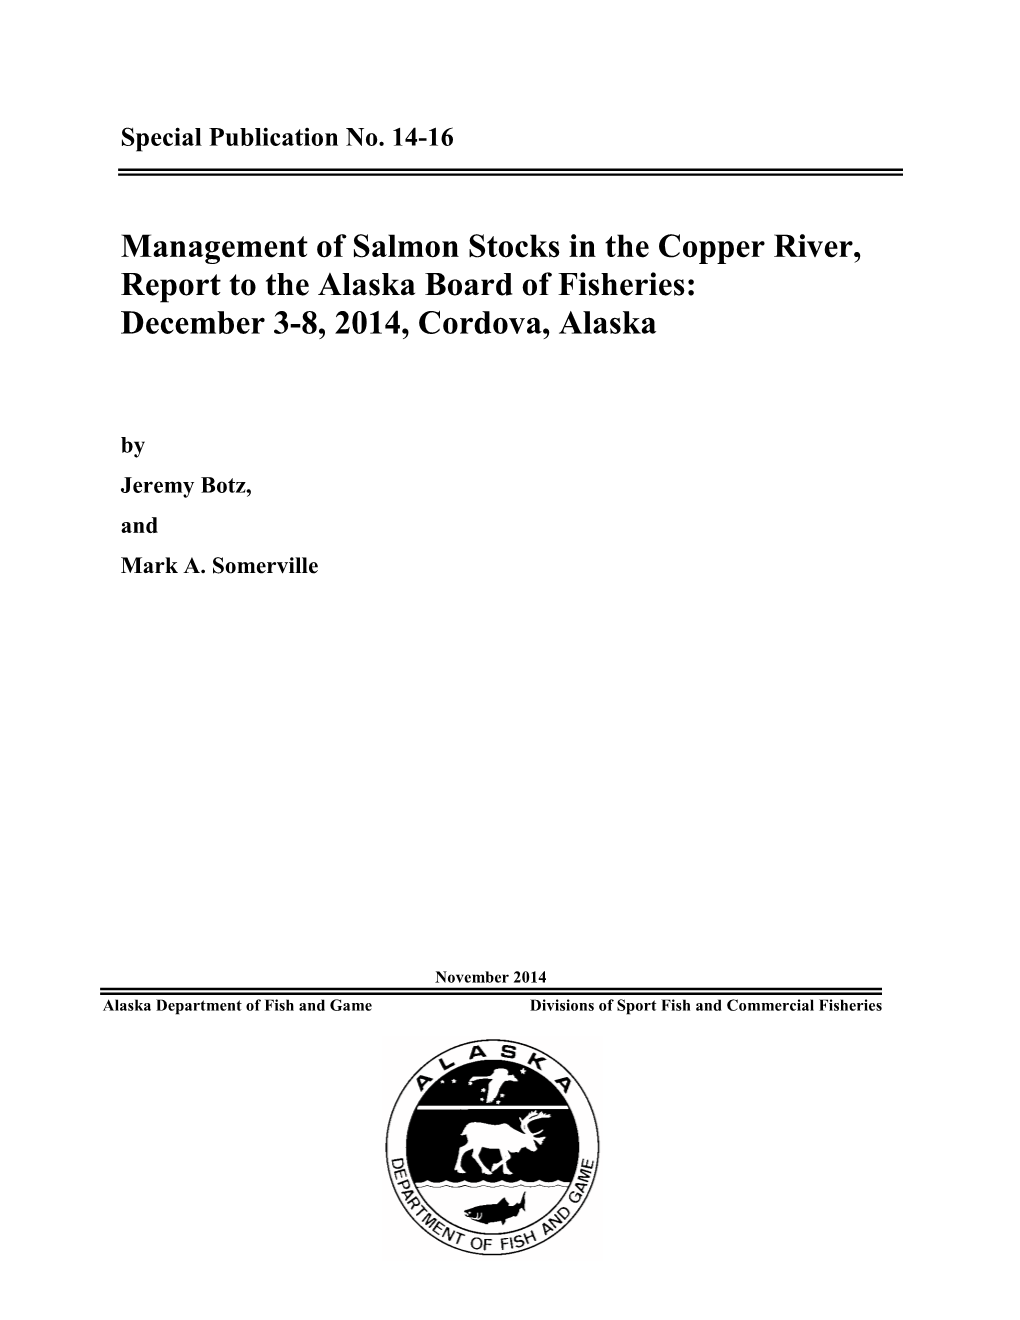 Management of Salmon Stocks in the Copper River, Report to the Alaska Board of Fisheries: December 3-8, 2014, Cordova, Alaska